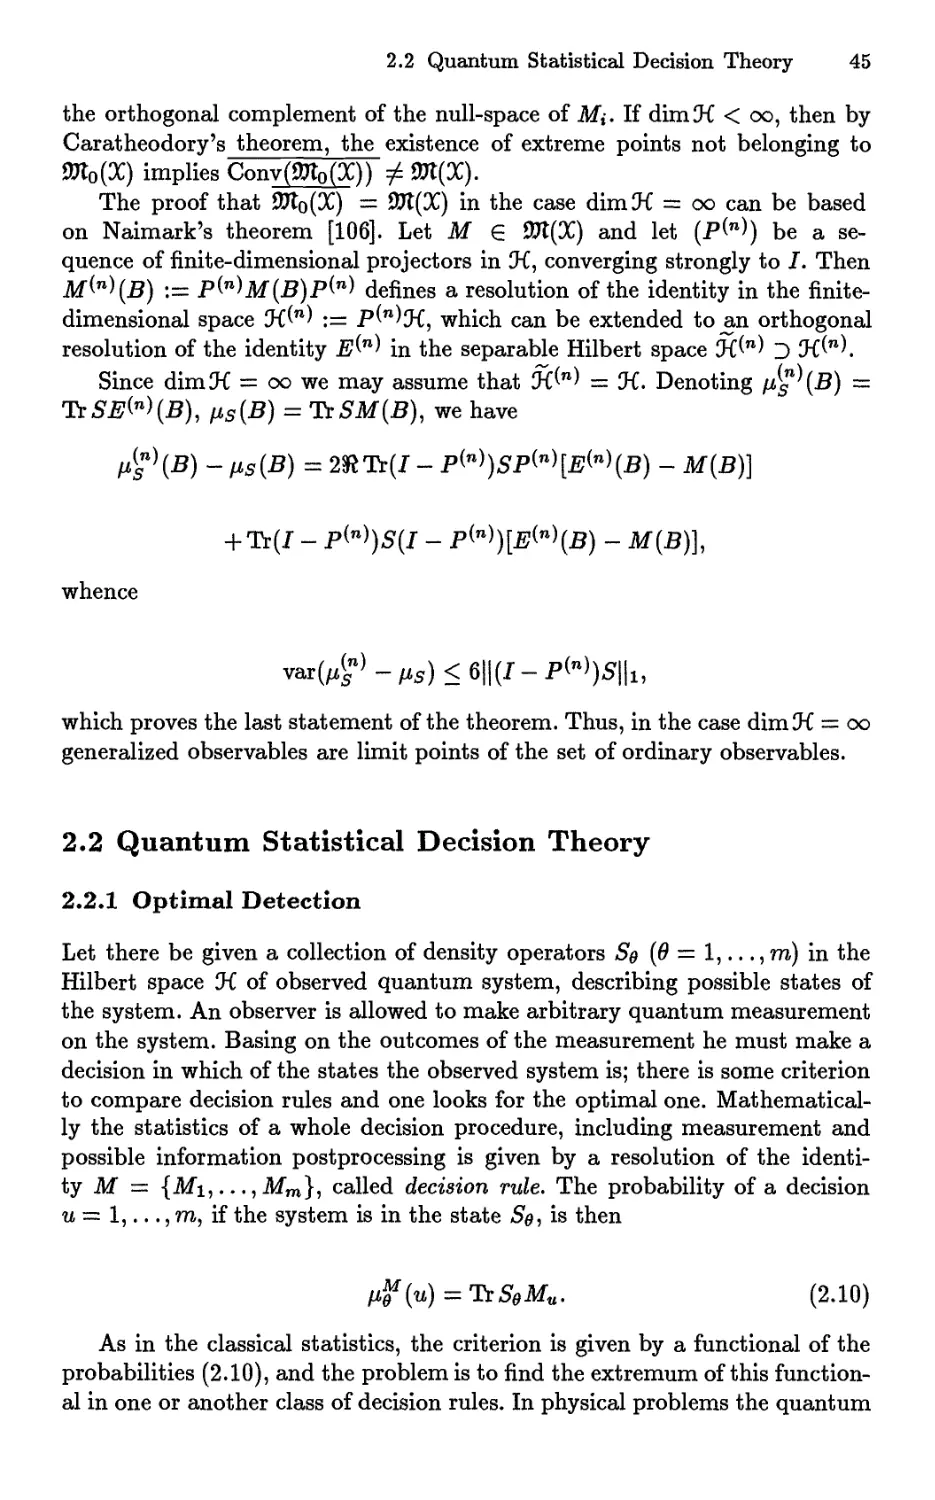 2.2 Quantum Statistical Decision Theory